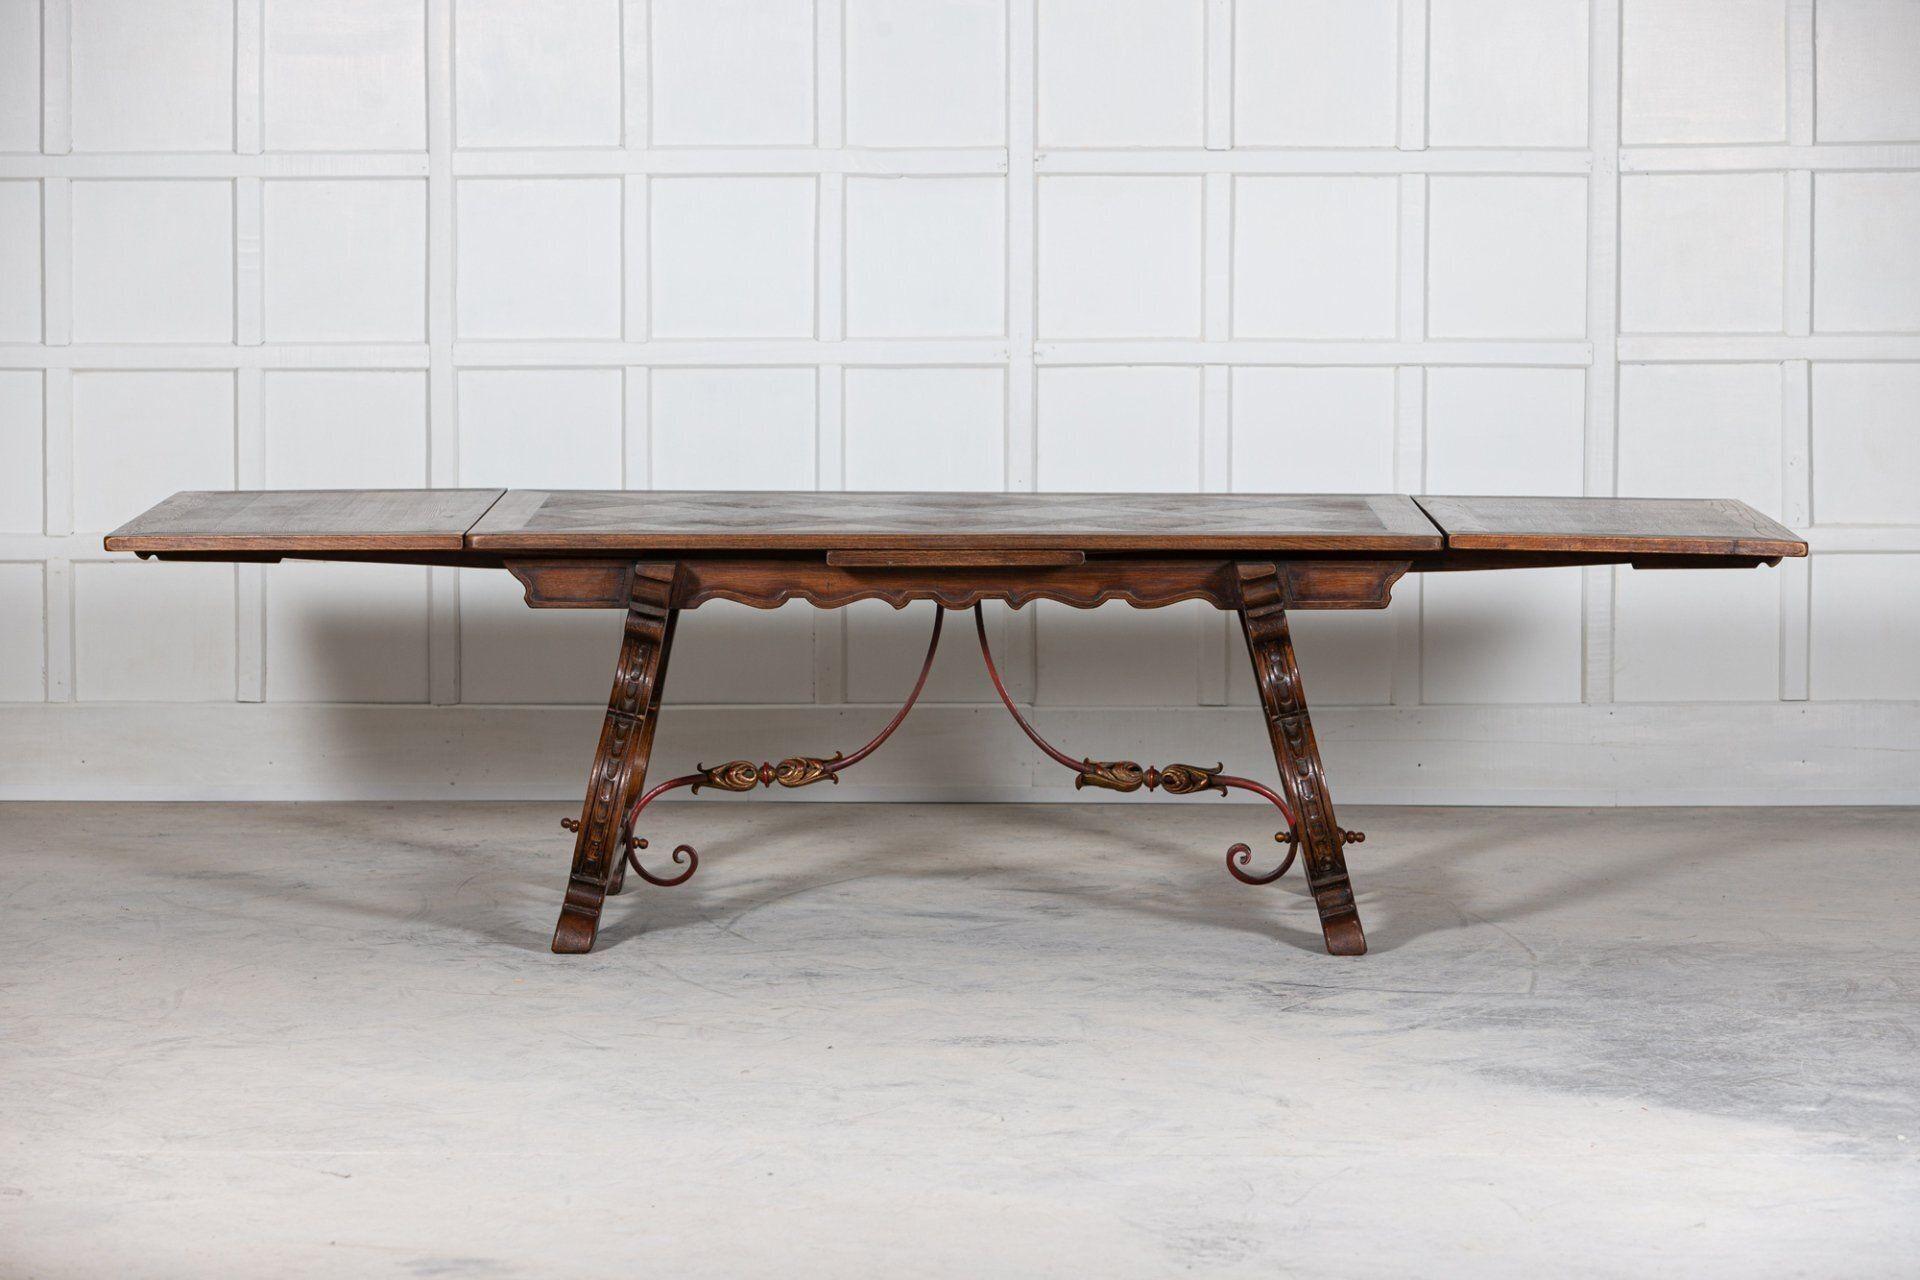 Circa 1940
Spanish extending oak & iron dining table.

Sku 1114
Extended W 296 x D 100 x H 75cm
Not extended W 170 X D 100 x H 75cm.